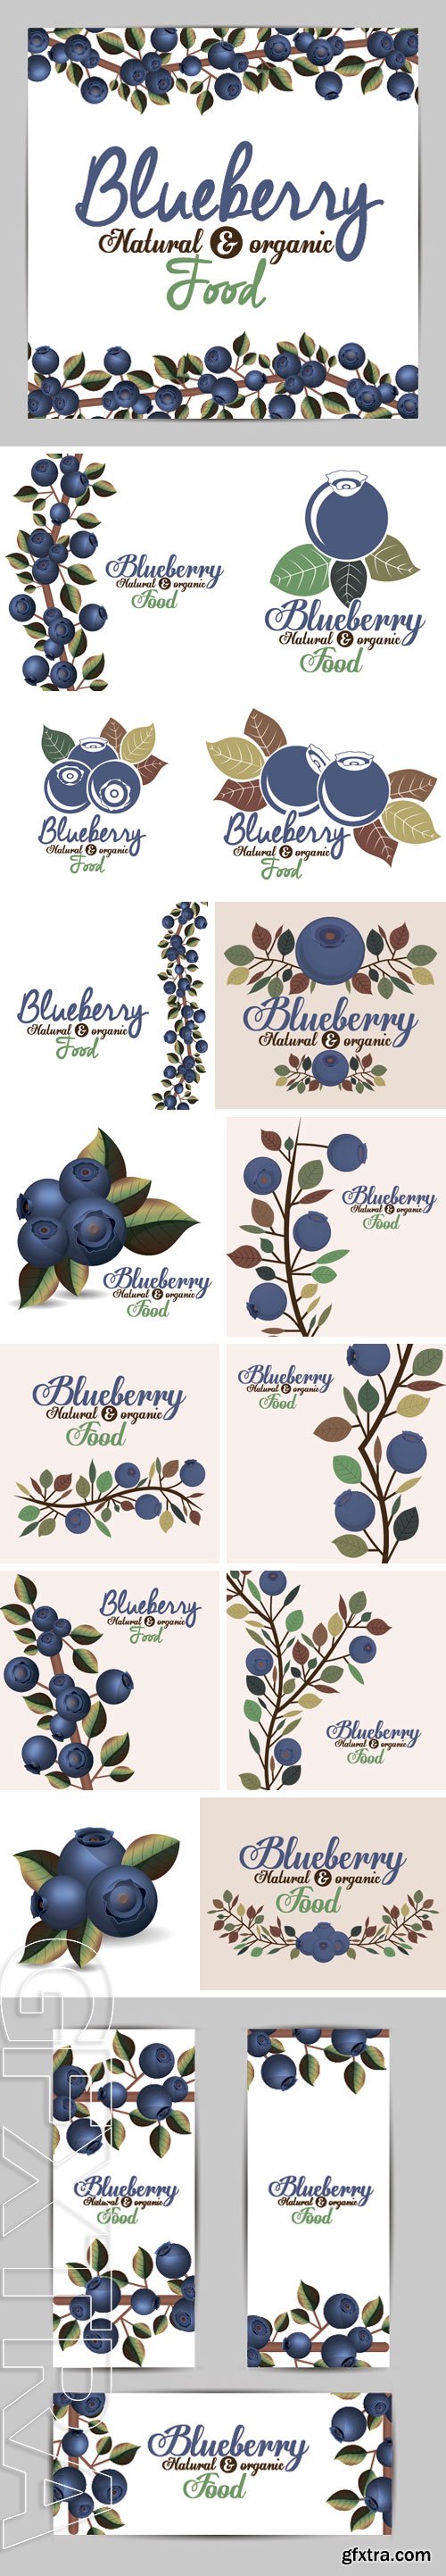 Stock Vectors - Blueberry design over white background, vector illustration